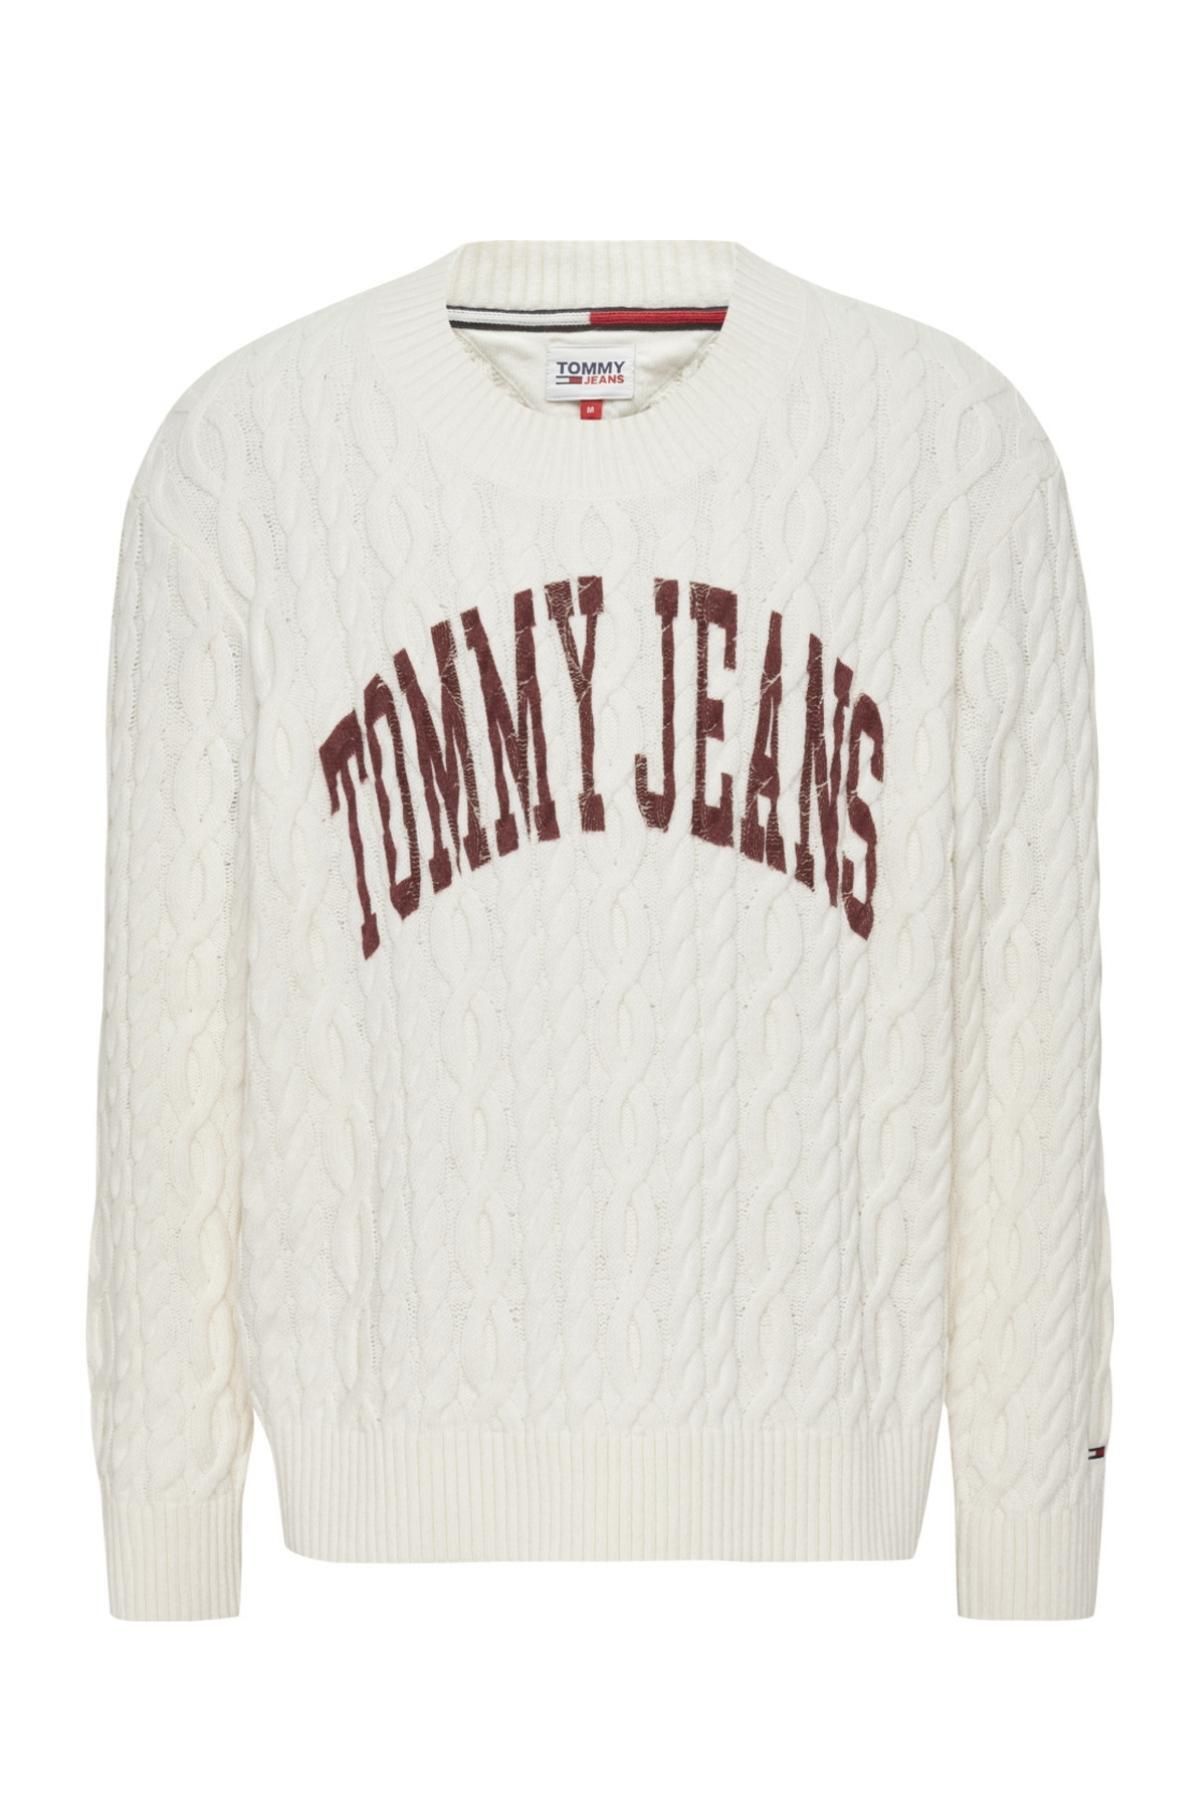 Tommy Hilfiger Erkek Beyaz Sweatshirt Dm0dm15070ybh-beyaz